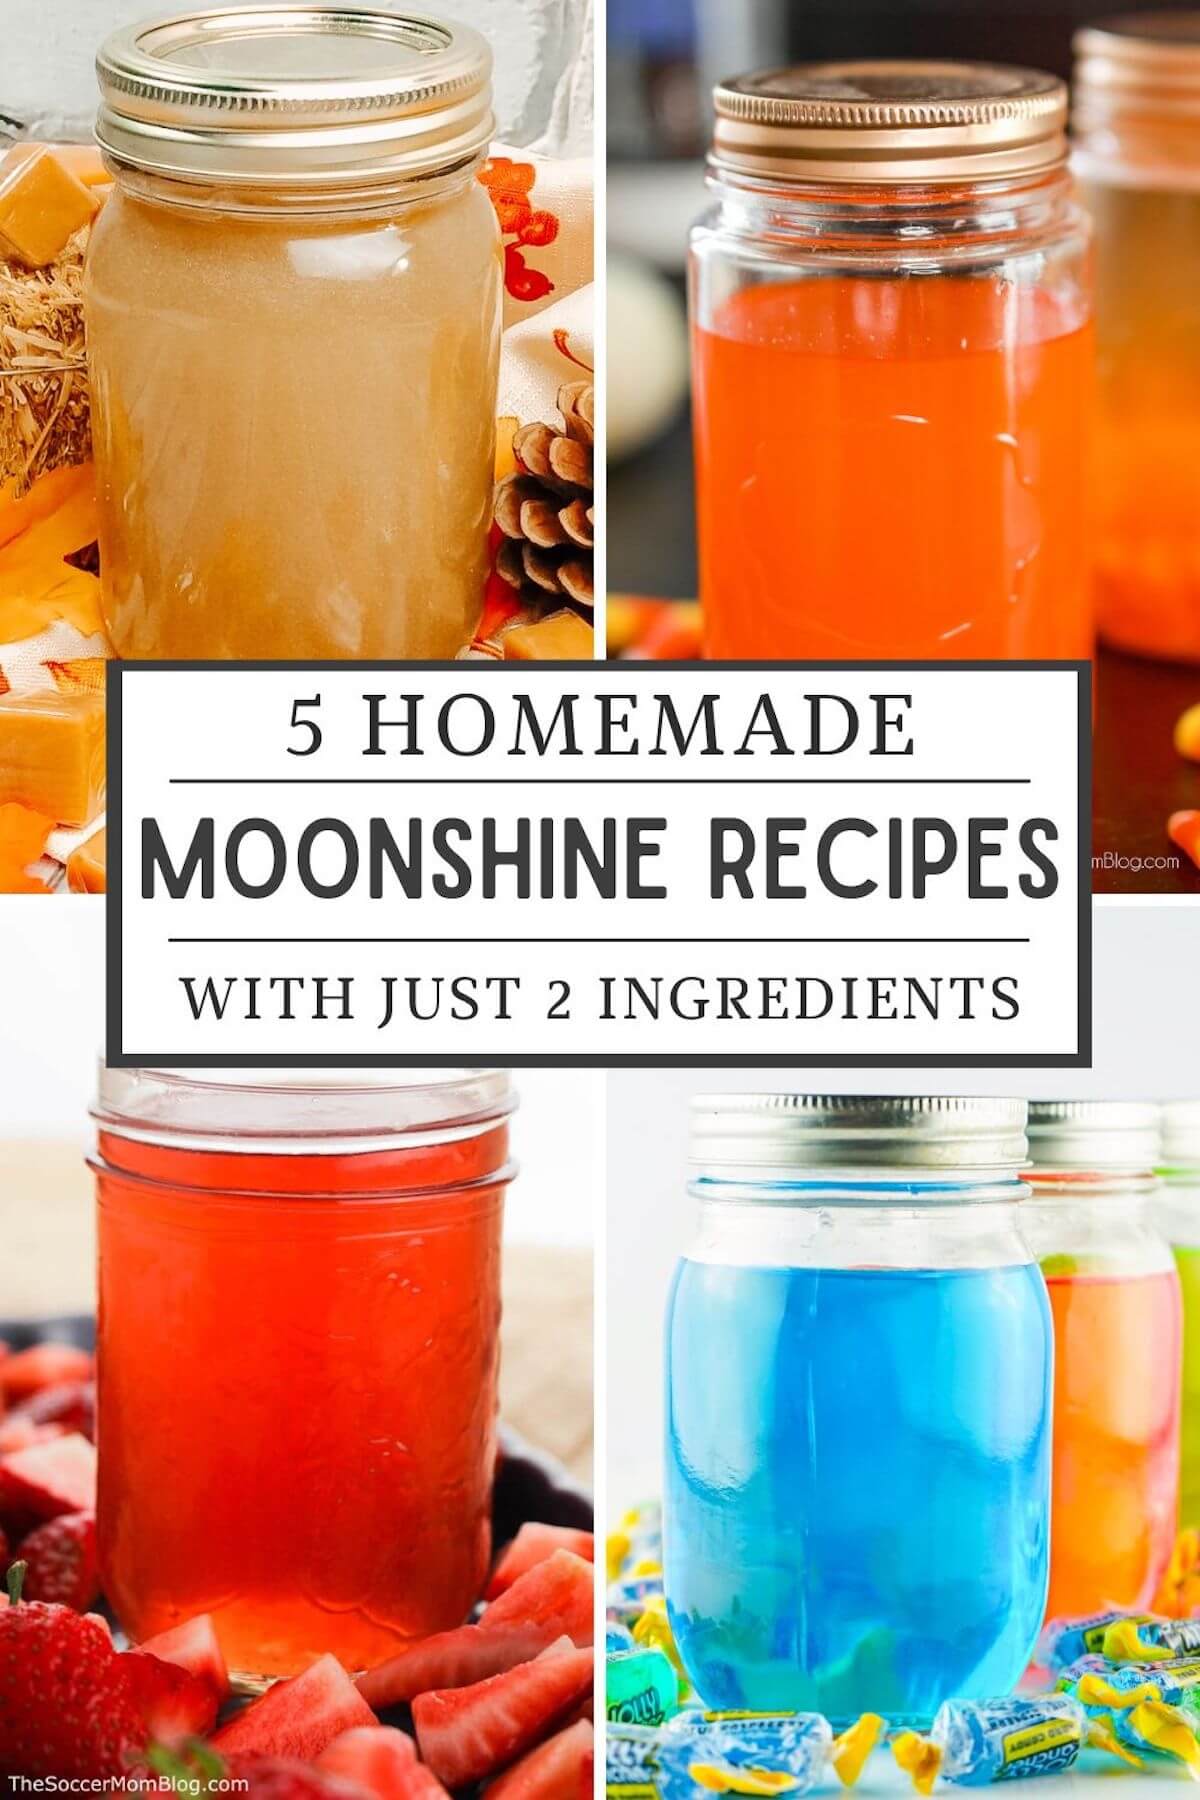 https://thesoccermomblog.com/wp-content/uploads/2020/03/Homemade-Moonshine-Recipes-pin3.jpg